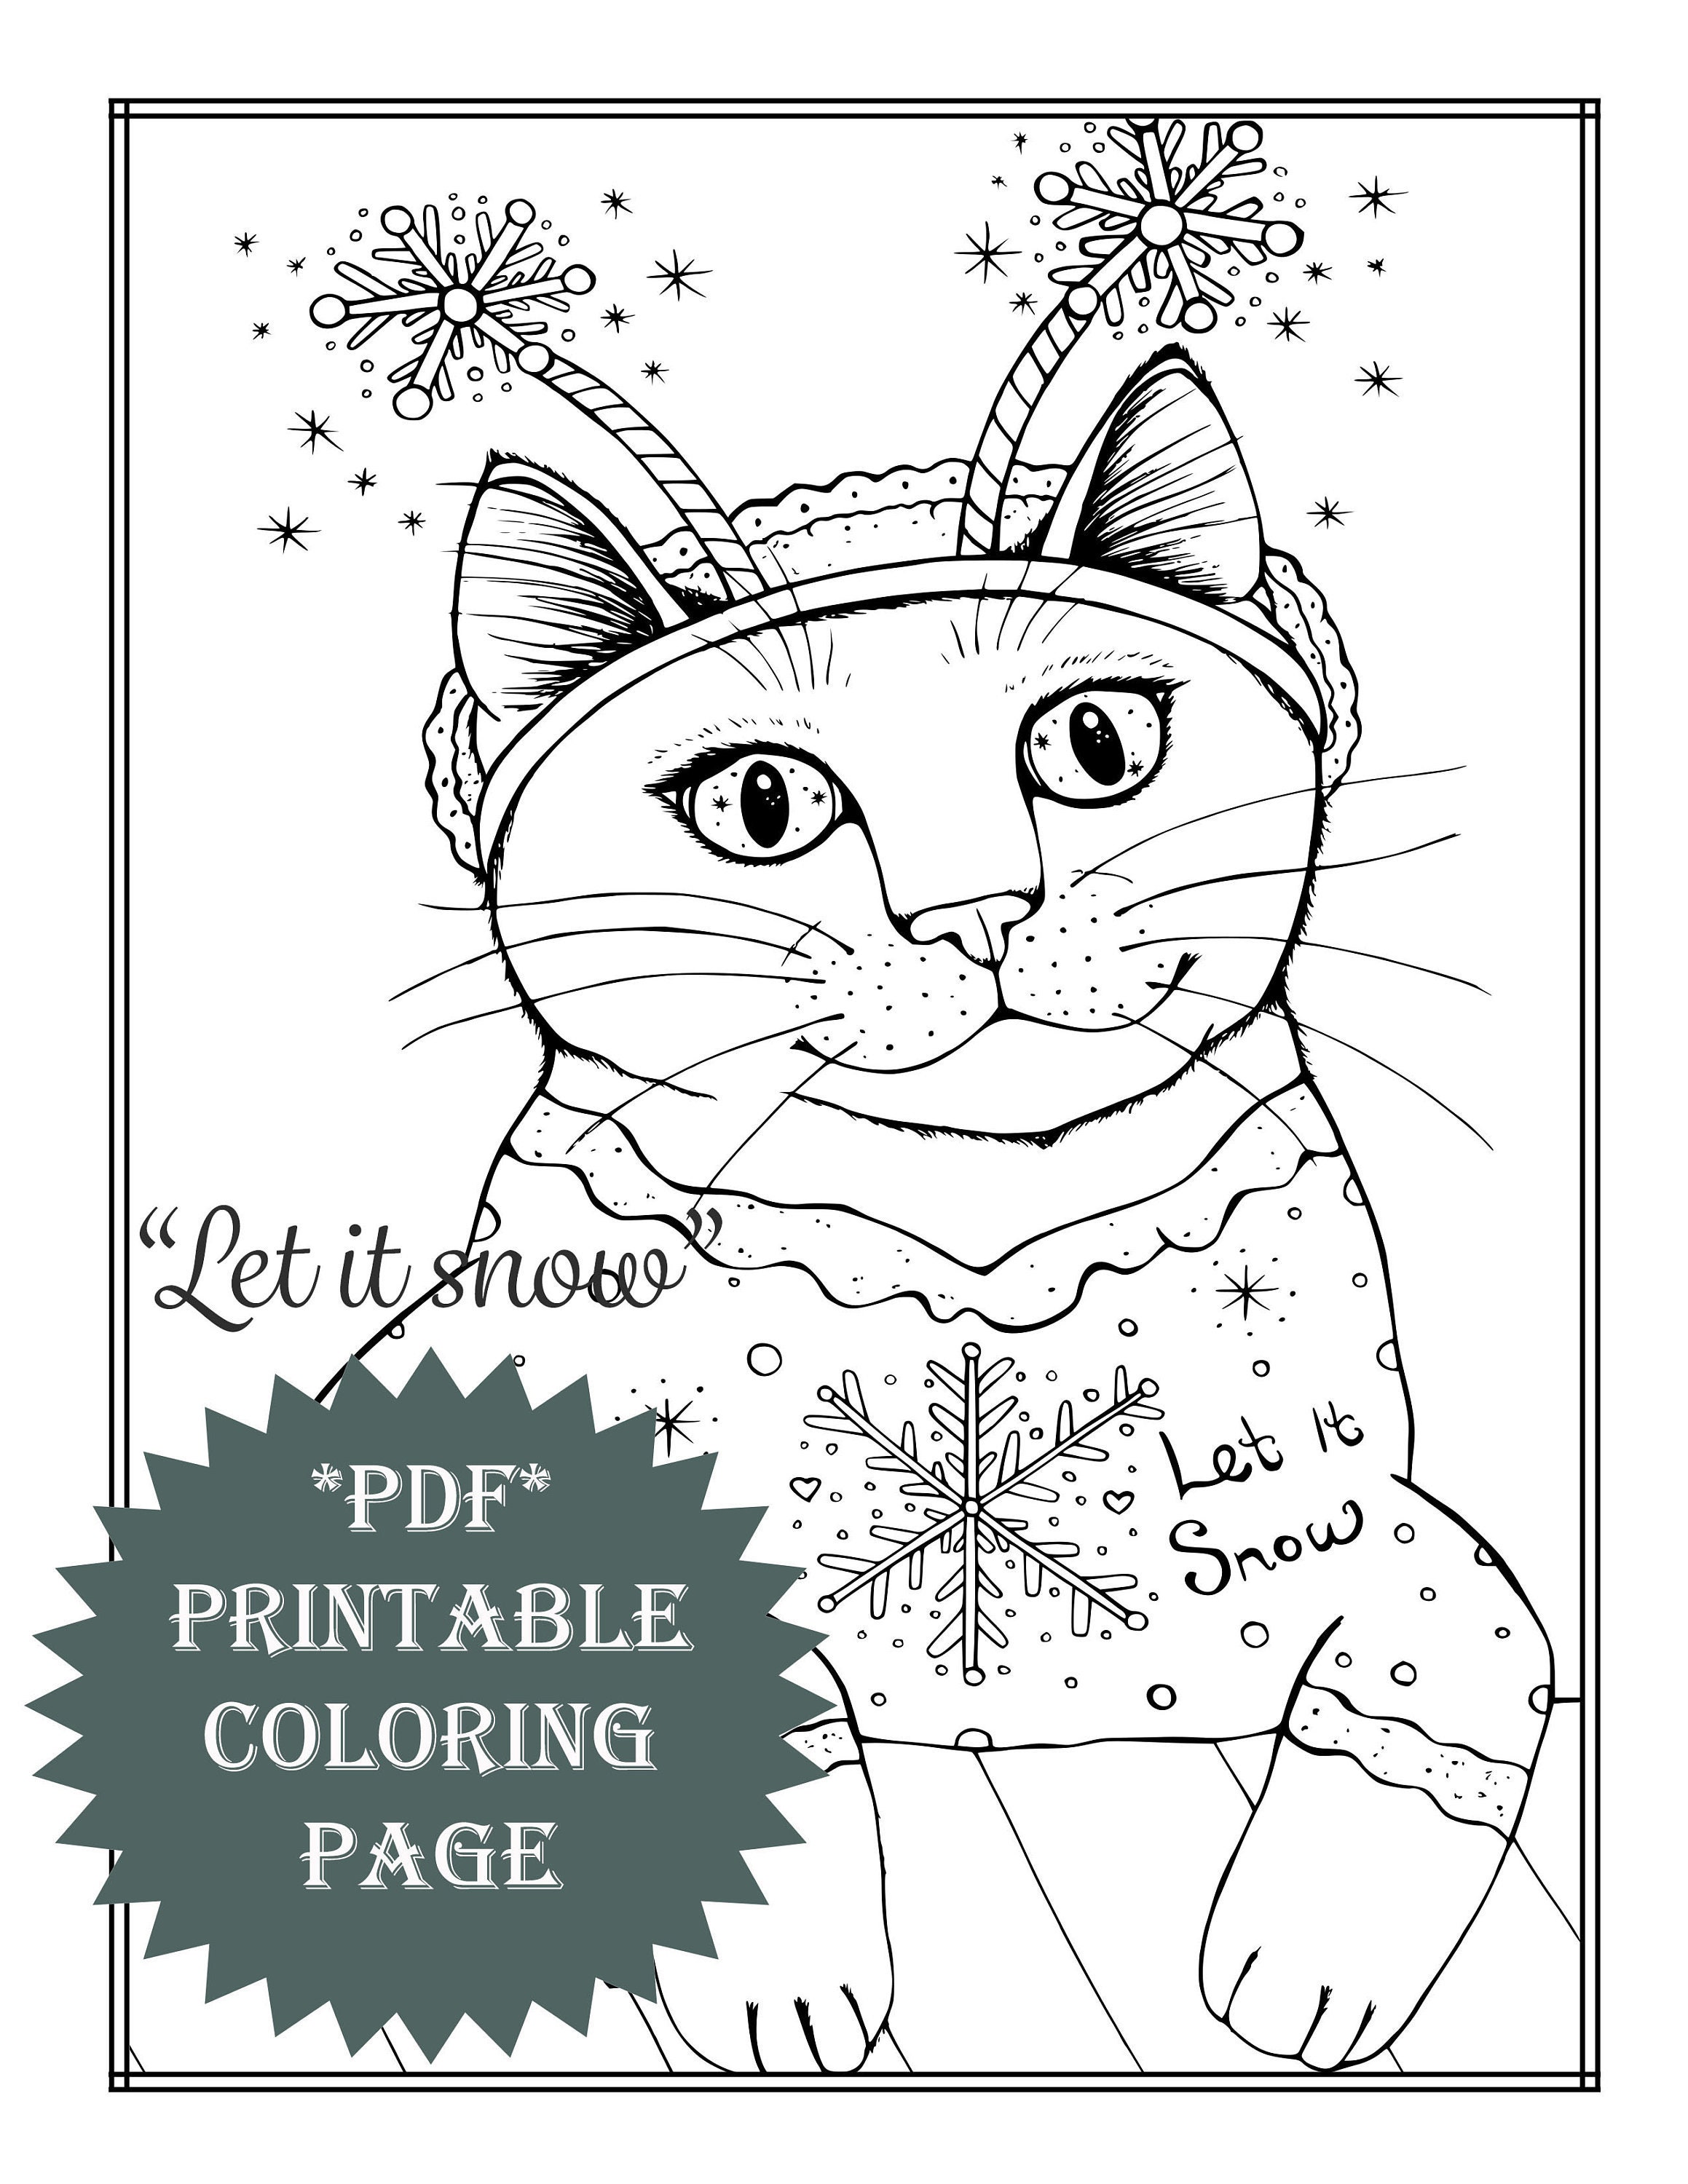 PDF printable coloring page winter snow christmas animal cat | Etsy